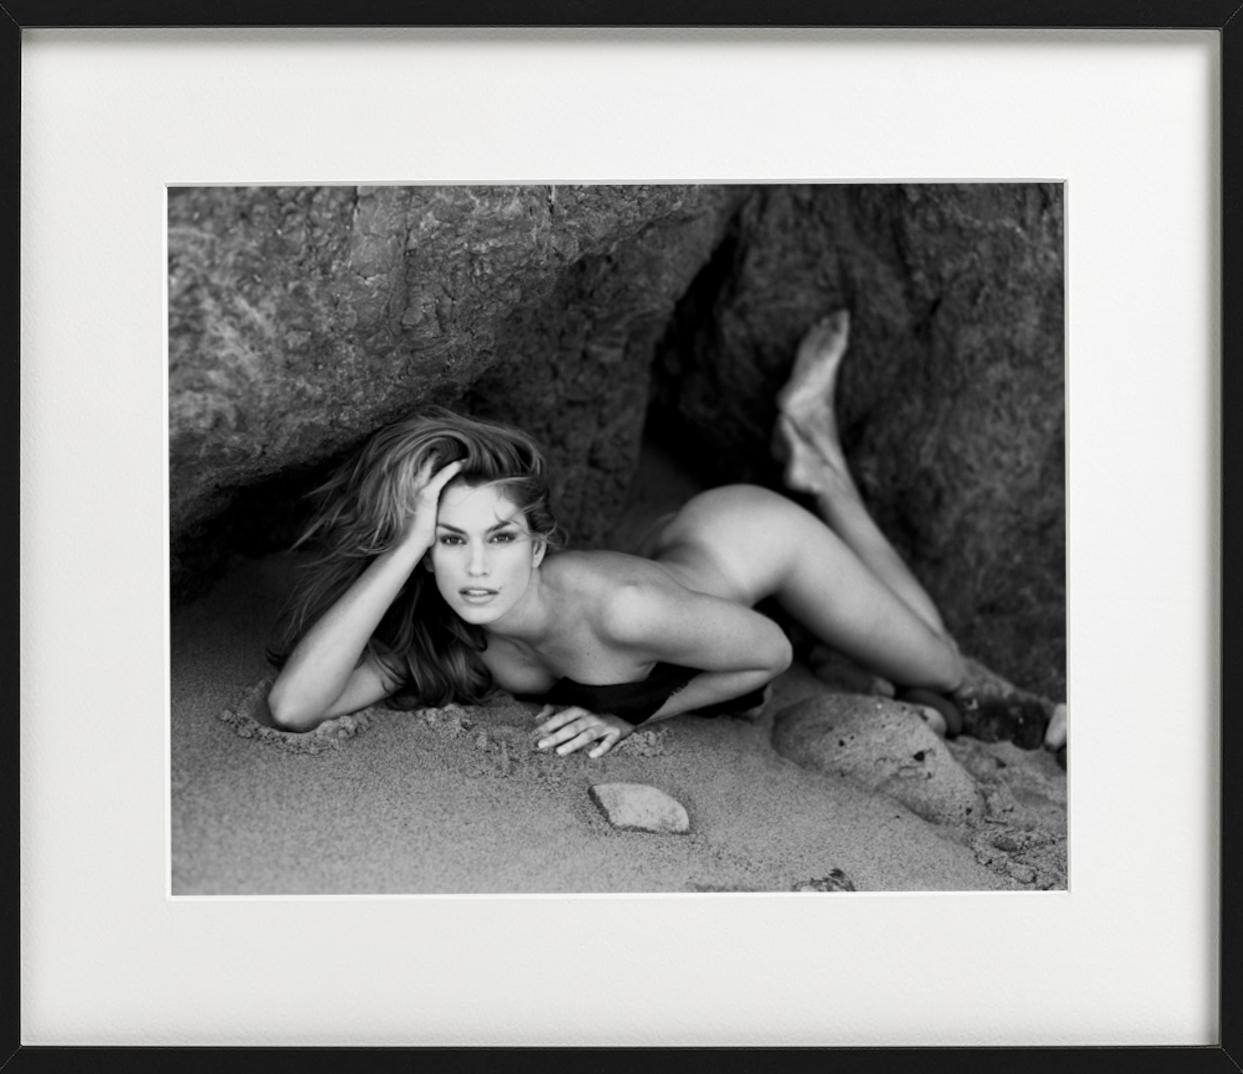 Cindy Crawford, Malibu - nude Model on the Beach, fine art photography, 1995 For Sale 2